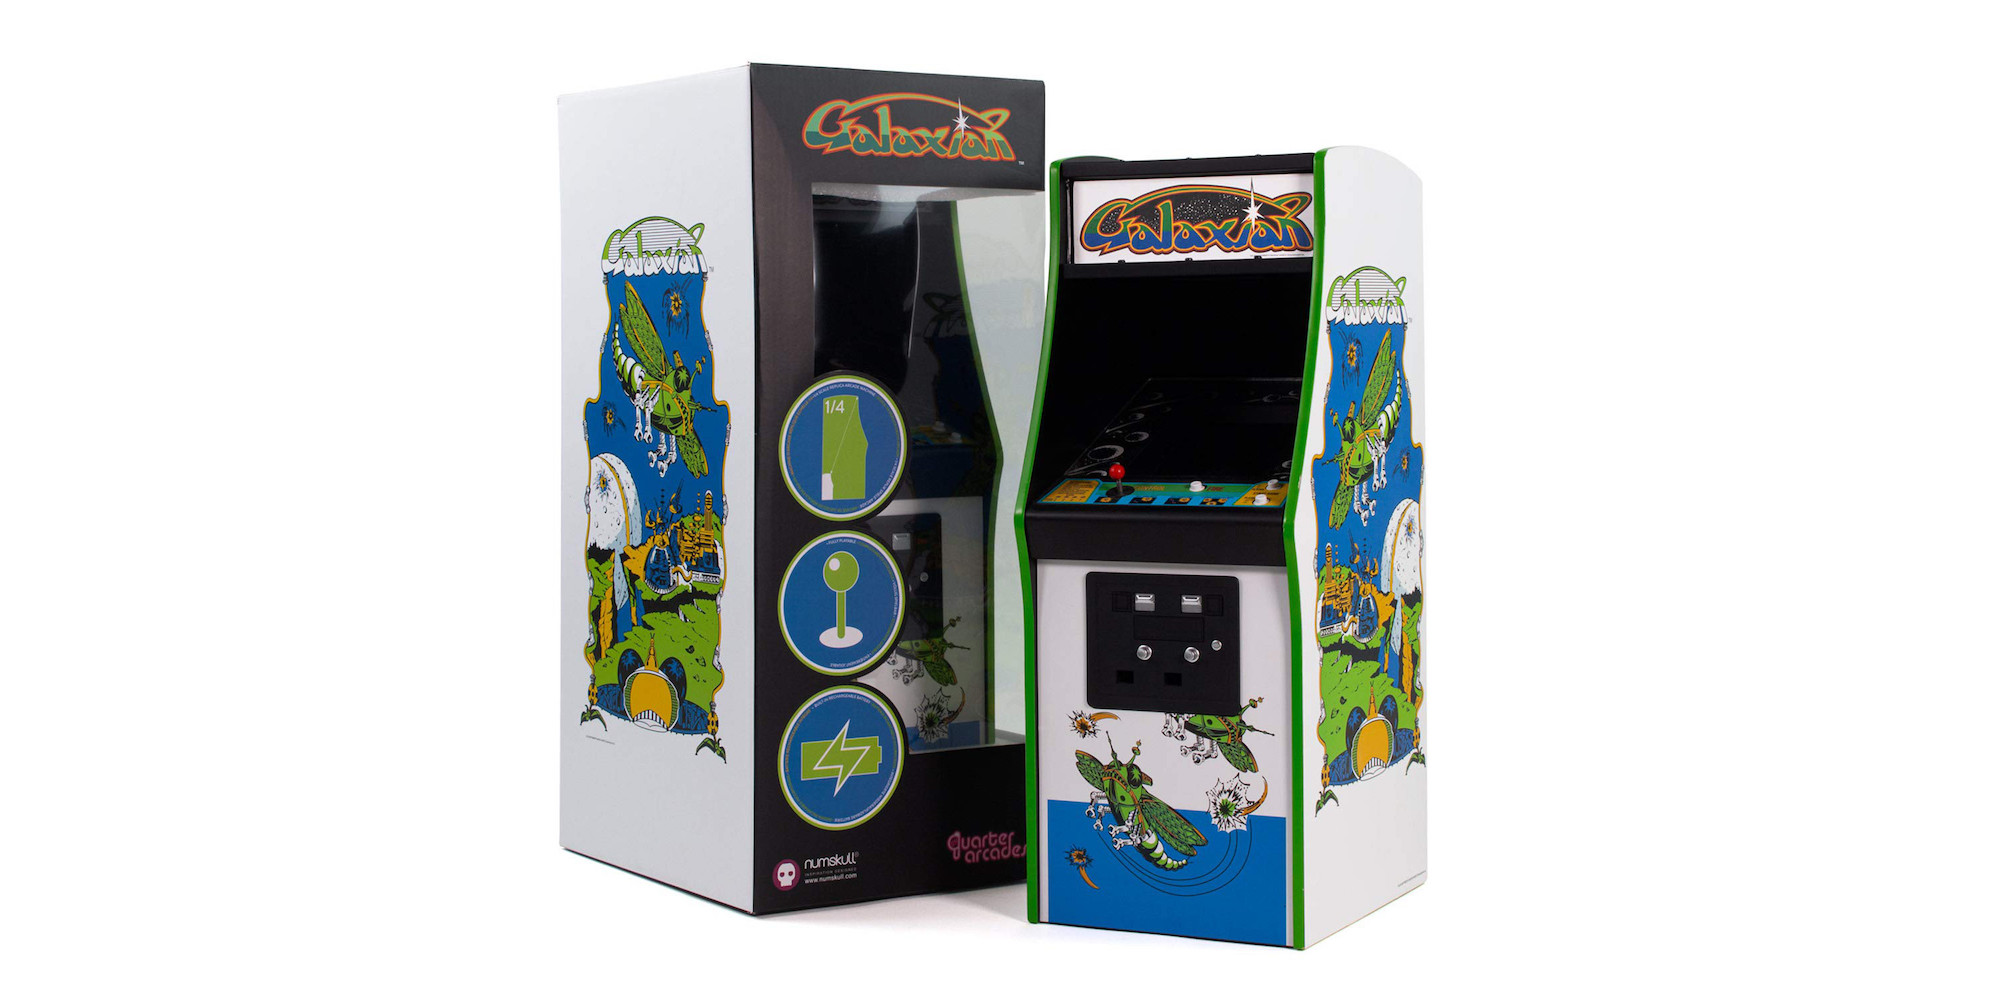 mini galaxian arcade game